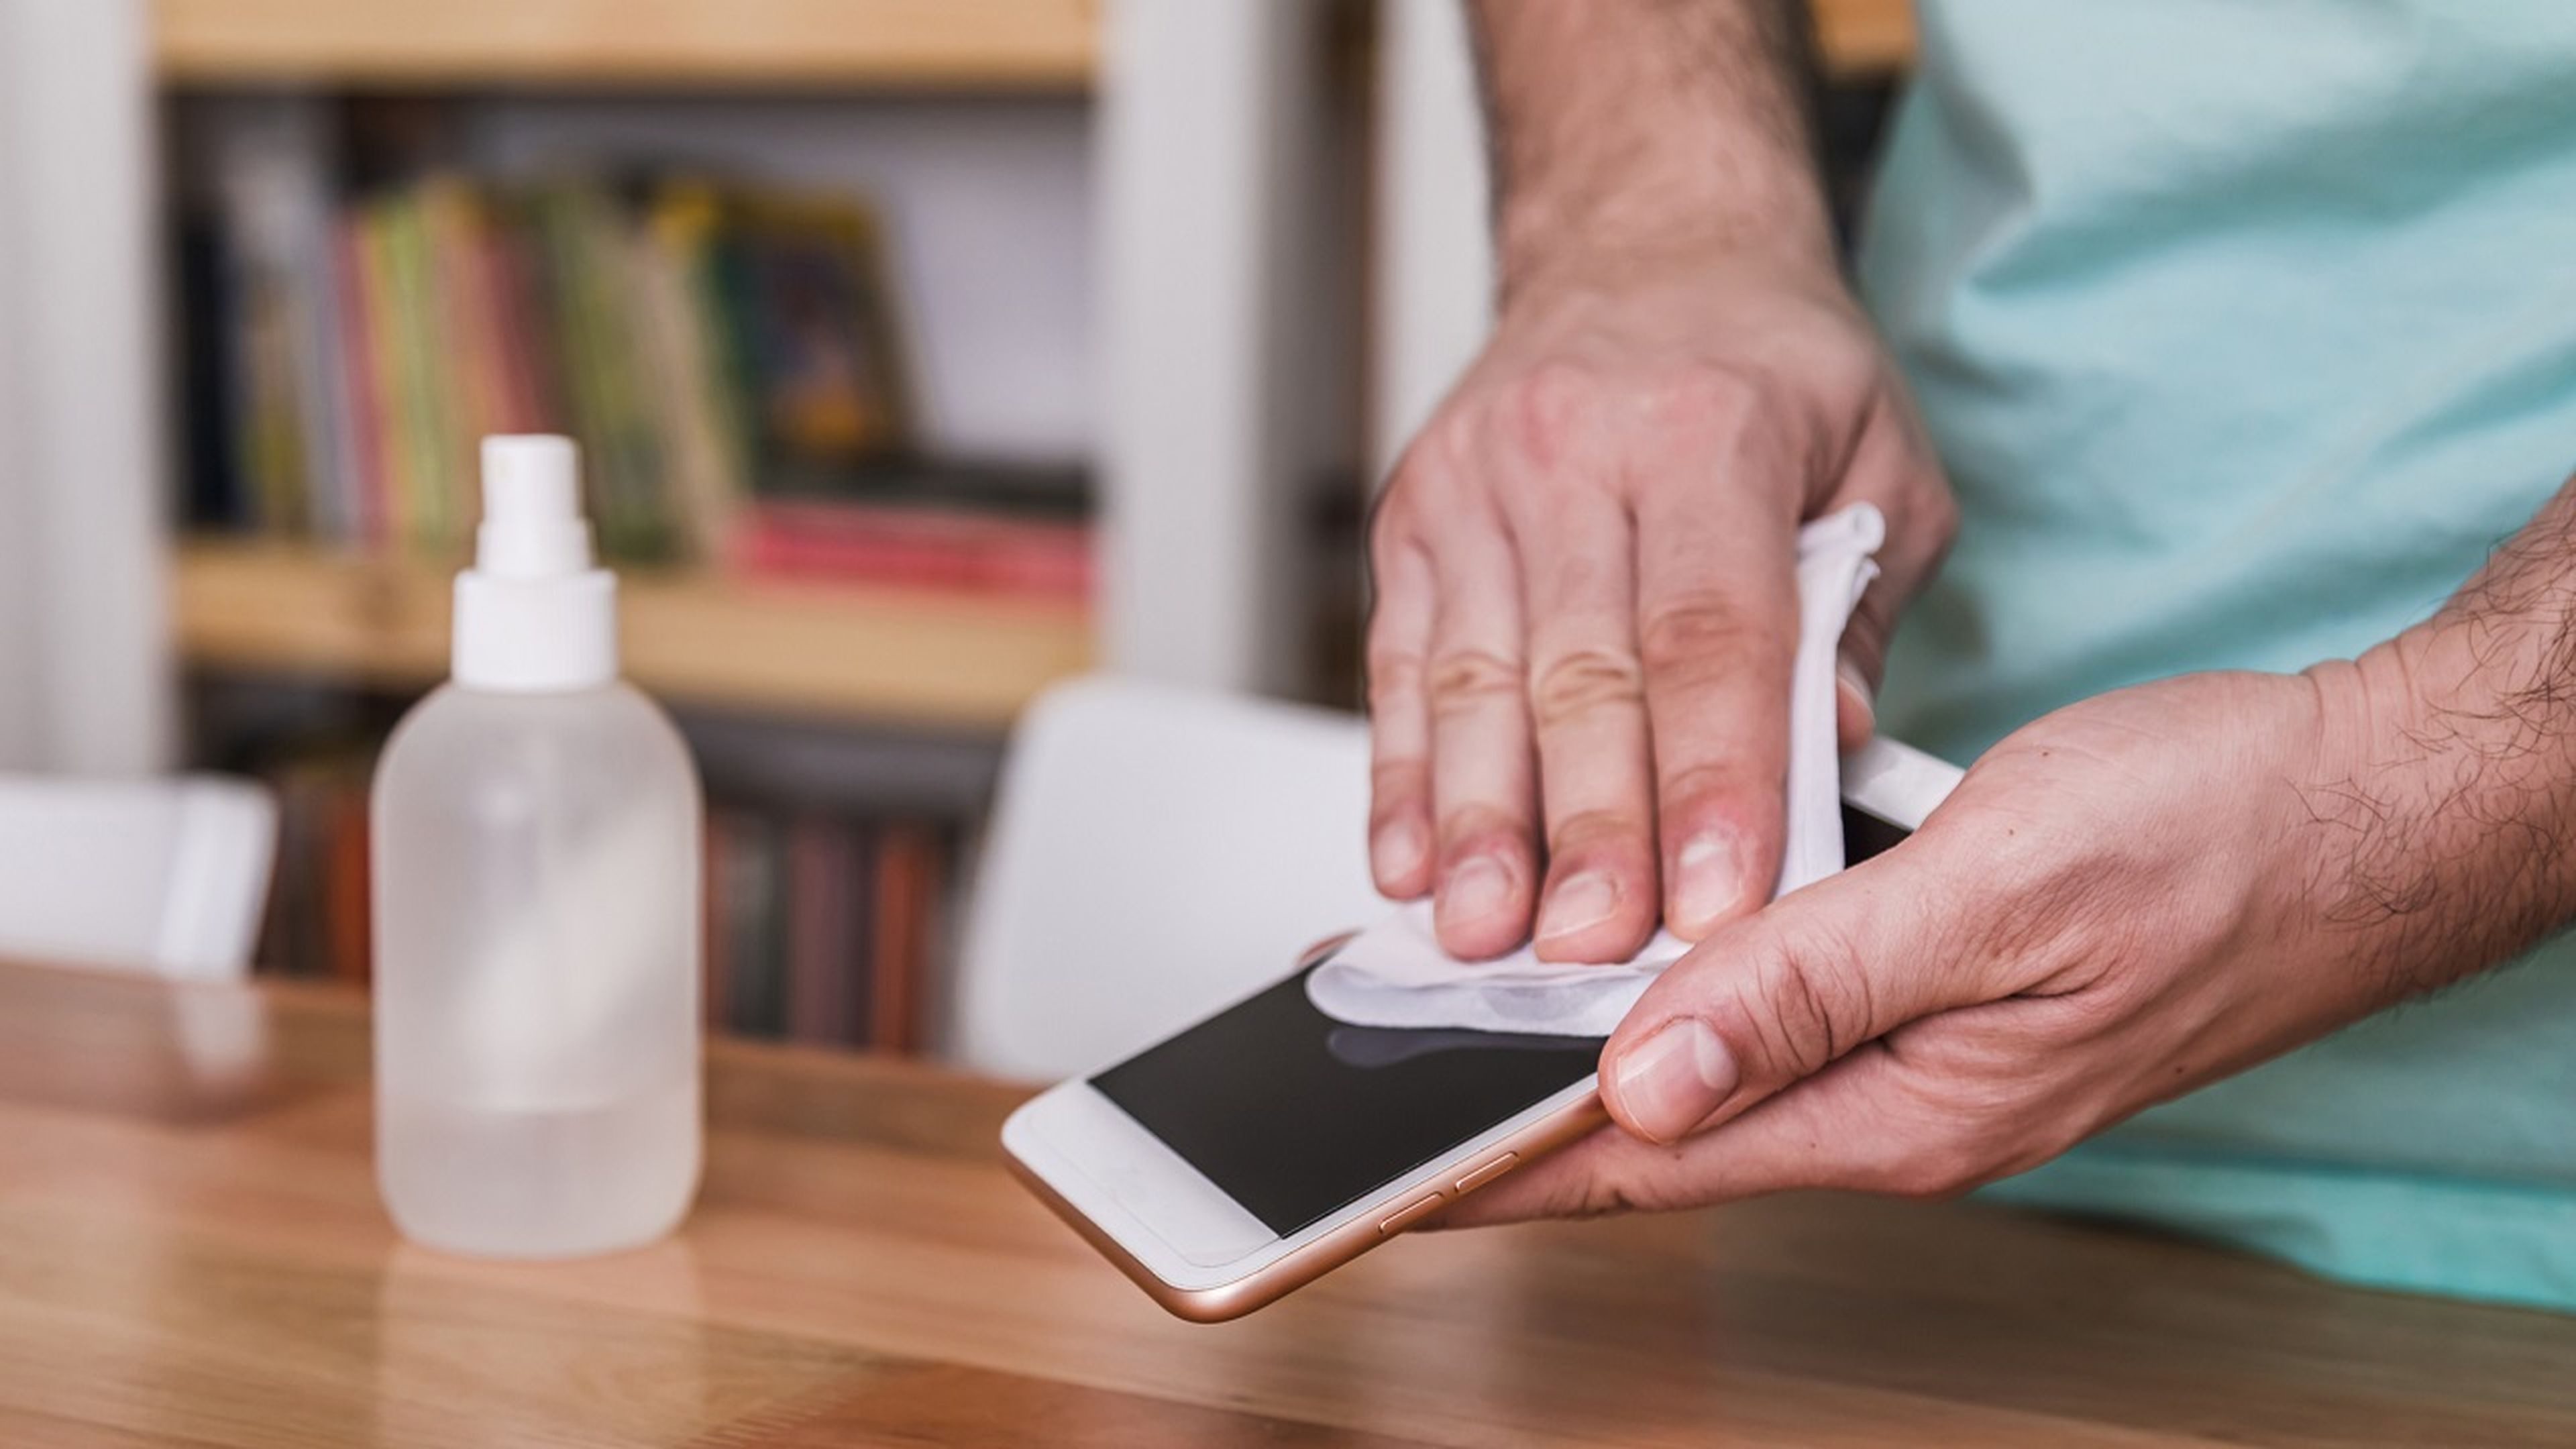 Así podrías estar dañando la pantalla de tu teléfono móvil si usas alcohol para limpiarla